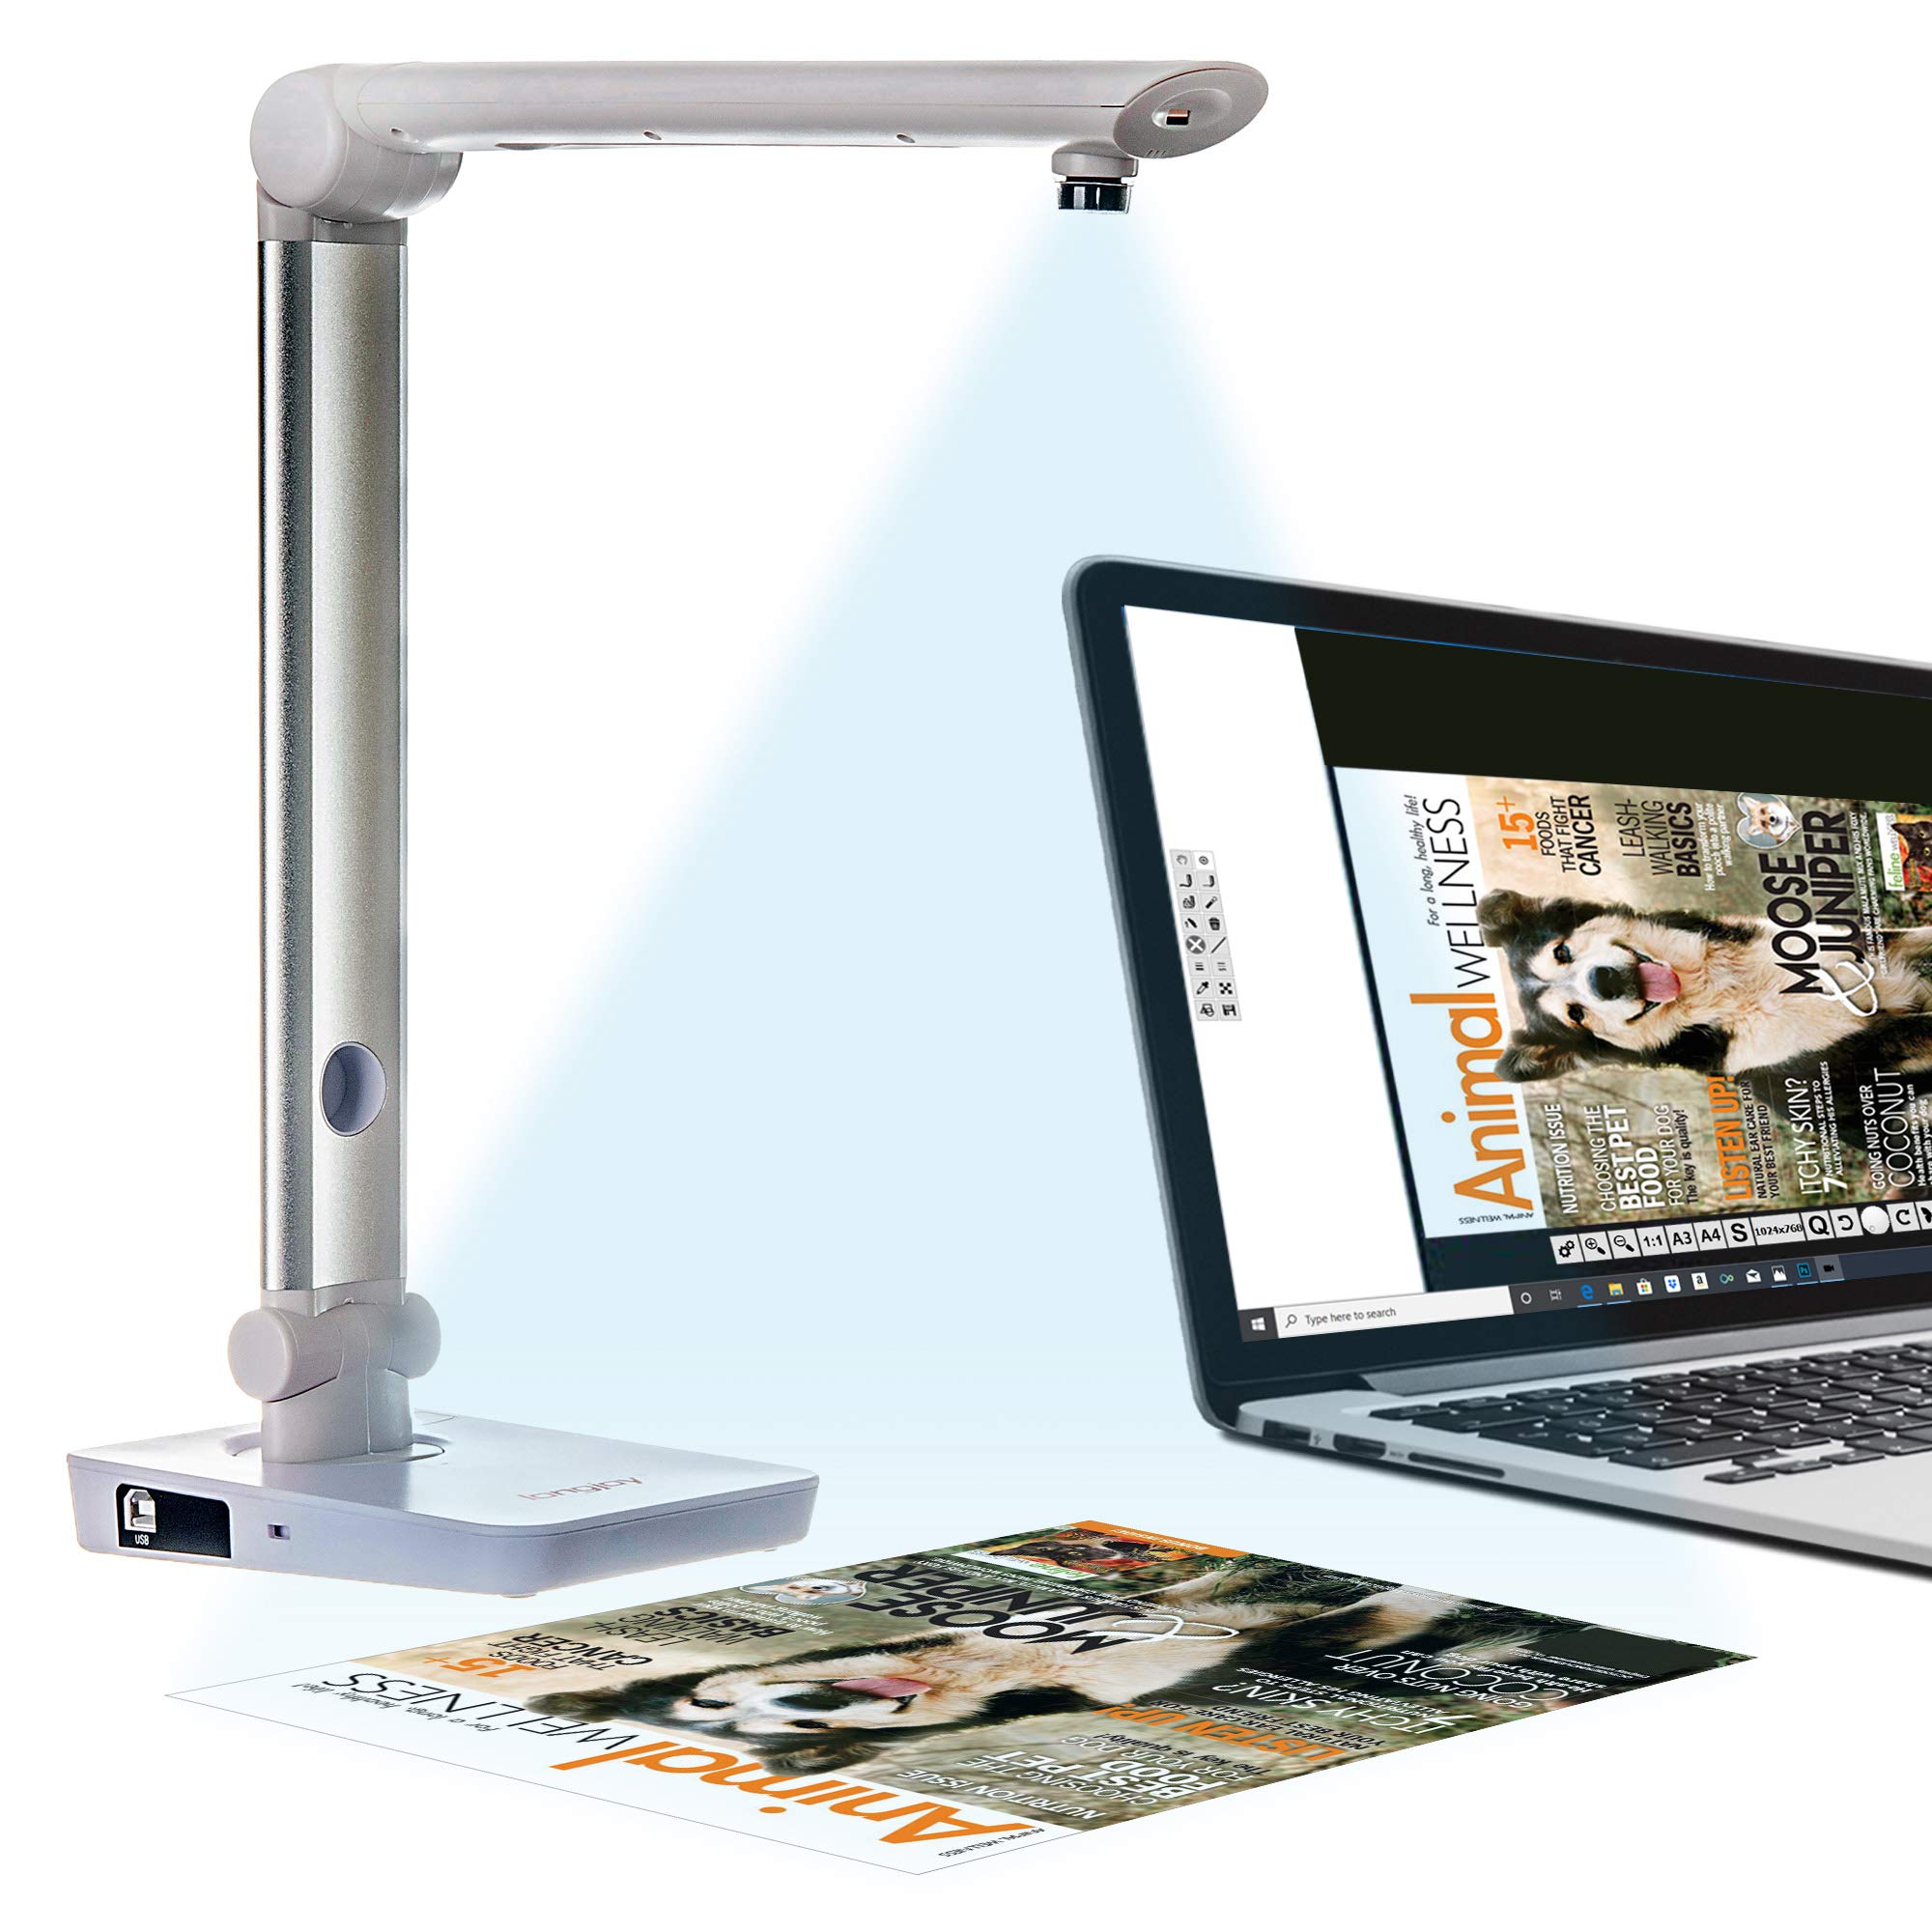 Longjoy Digital Portable Overhead USB Distance Teaching Document Camera LV-1020 (White)